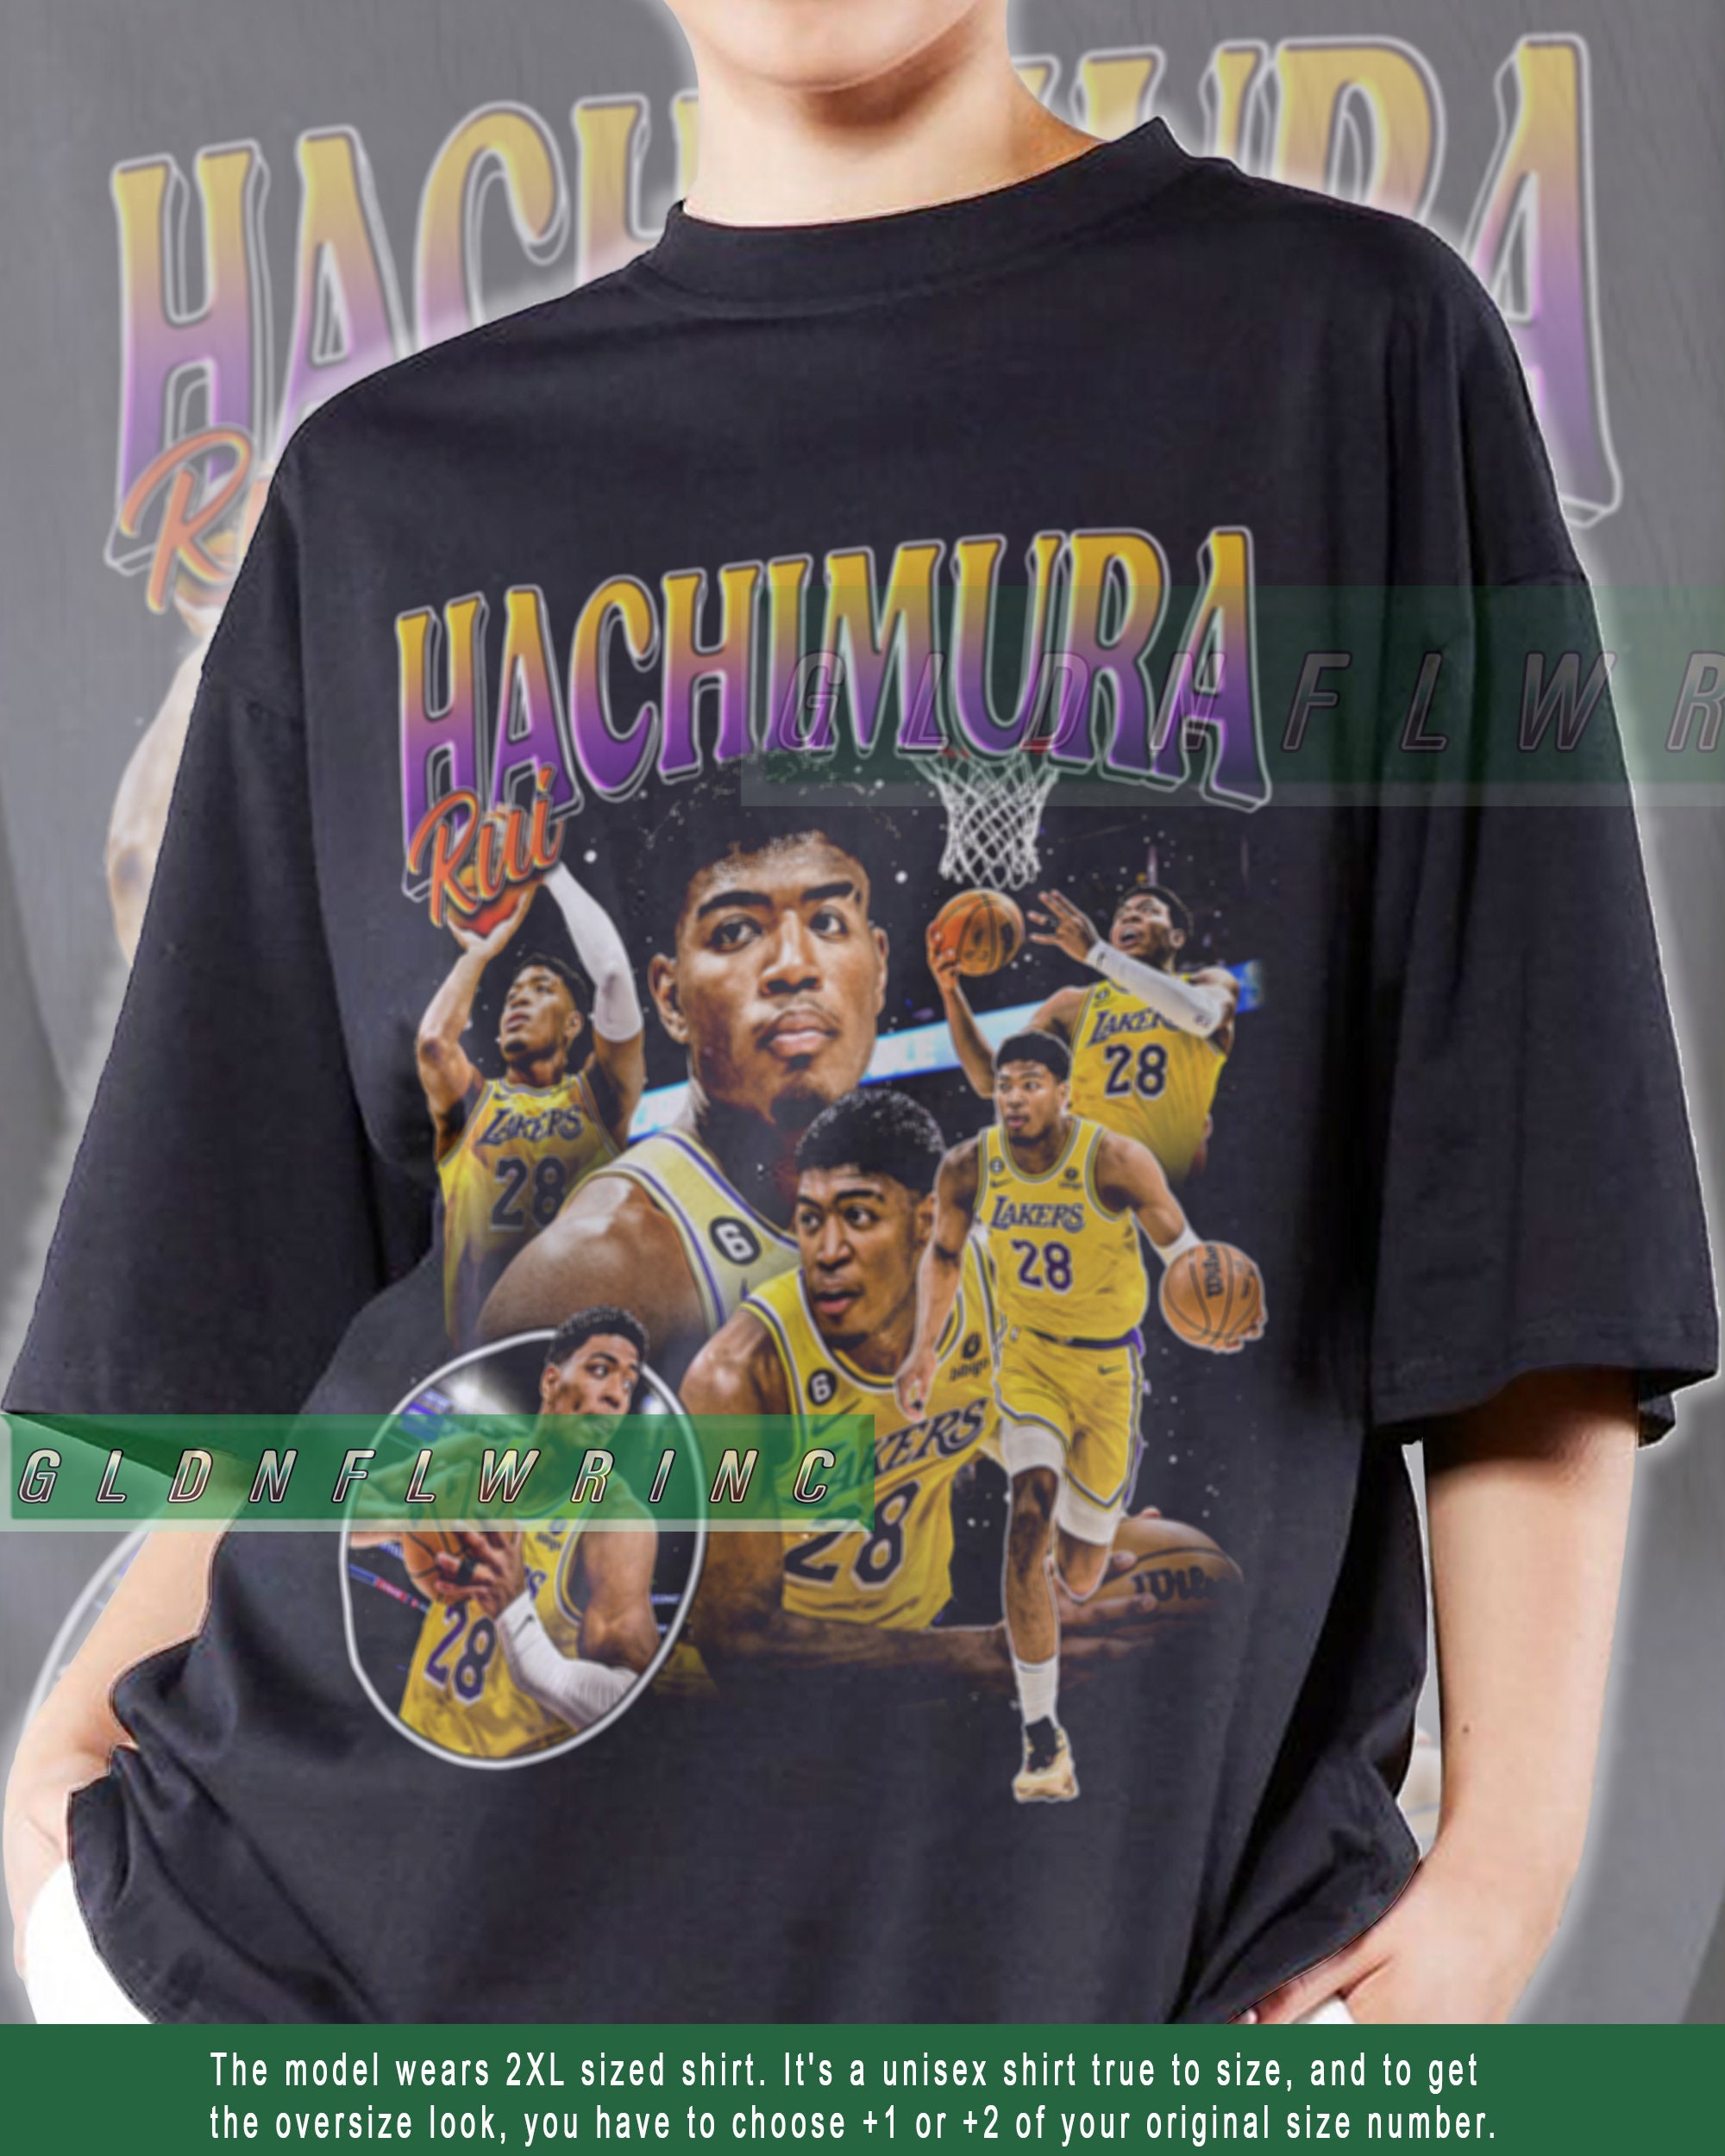 47 Brand Men's '47 Rui Hachimura Navy Washington Wizards Flex Player Graphic T-Shirt